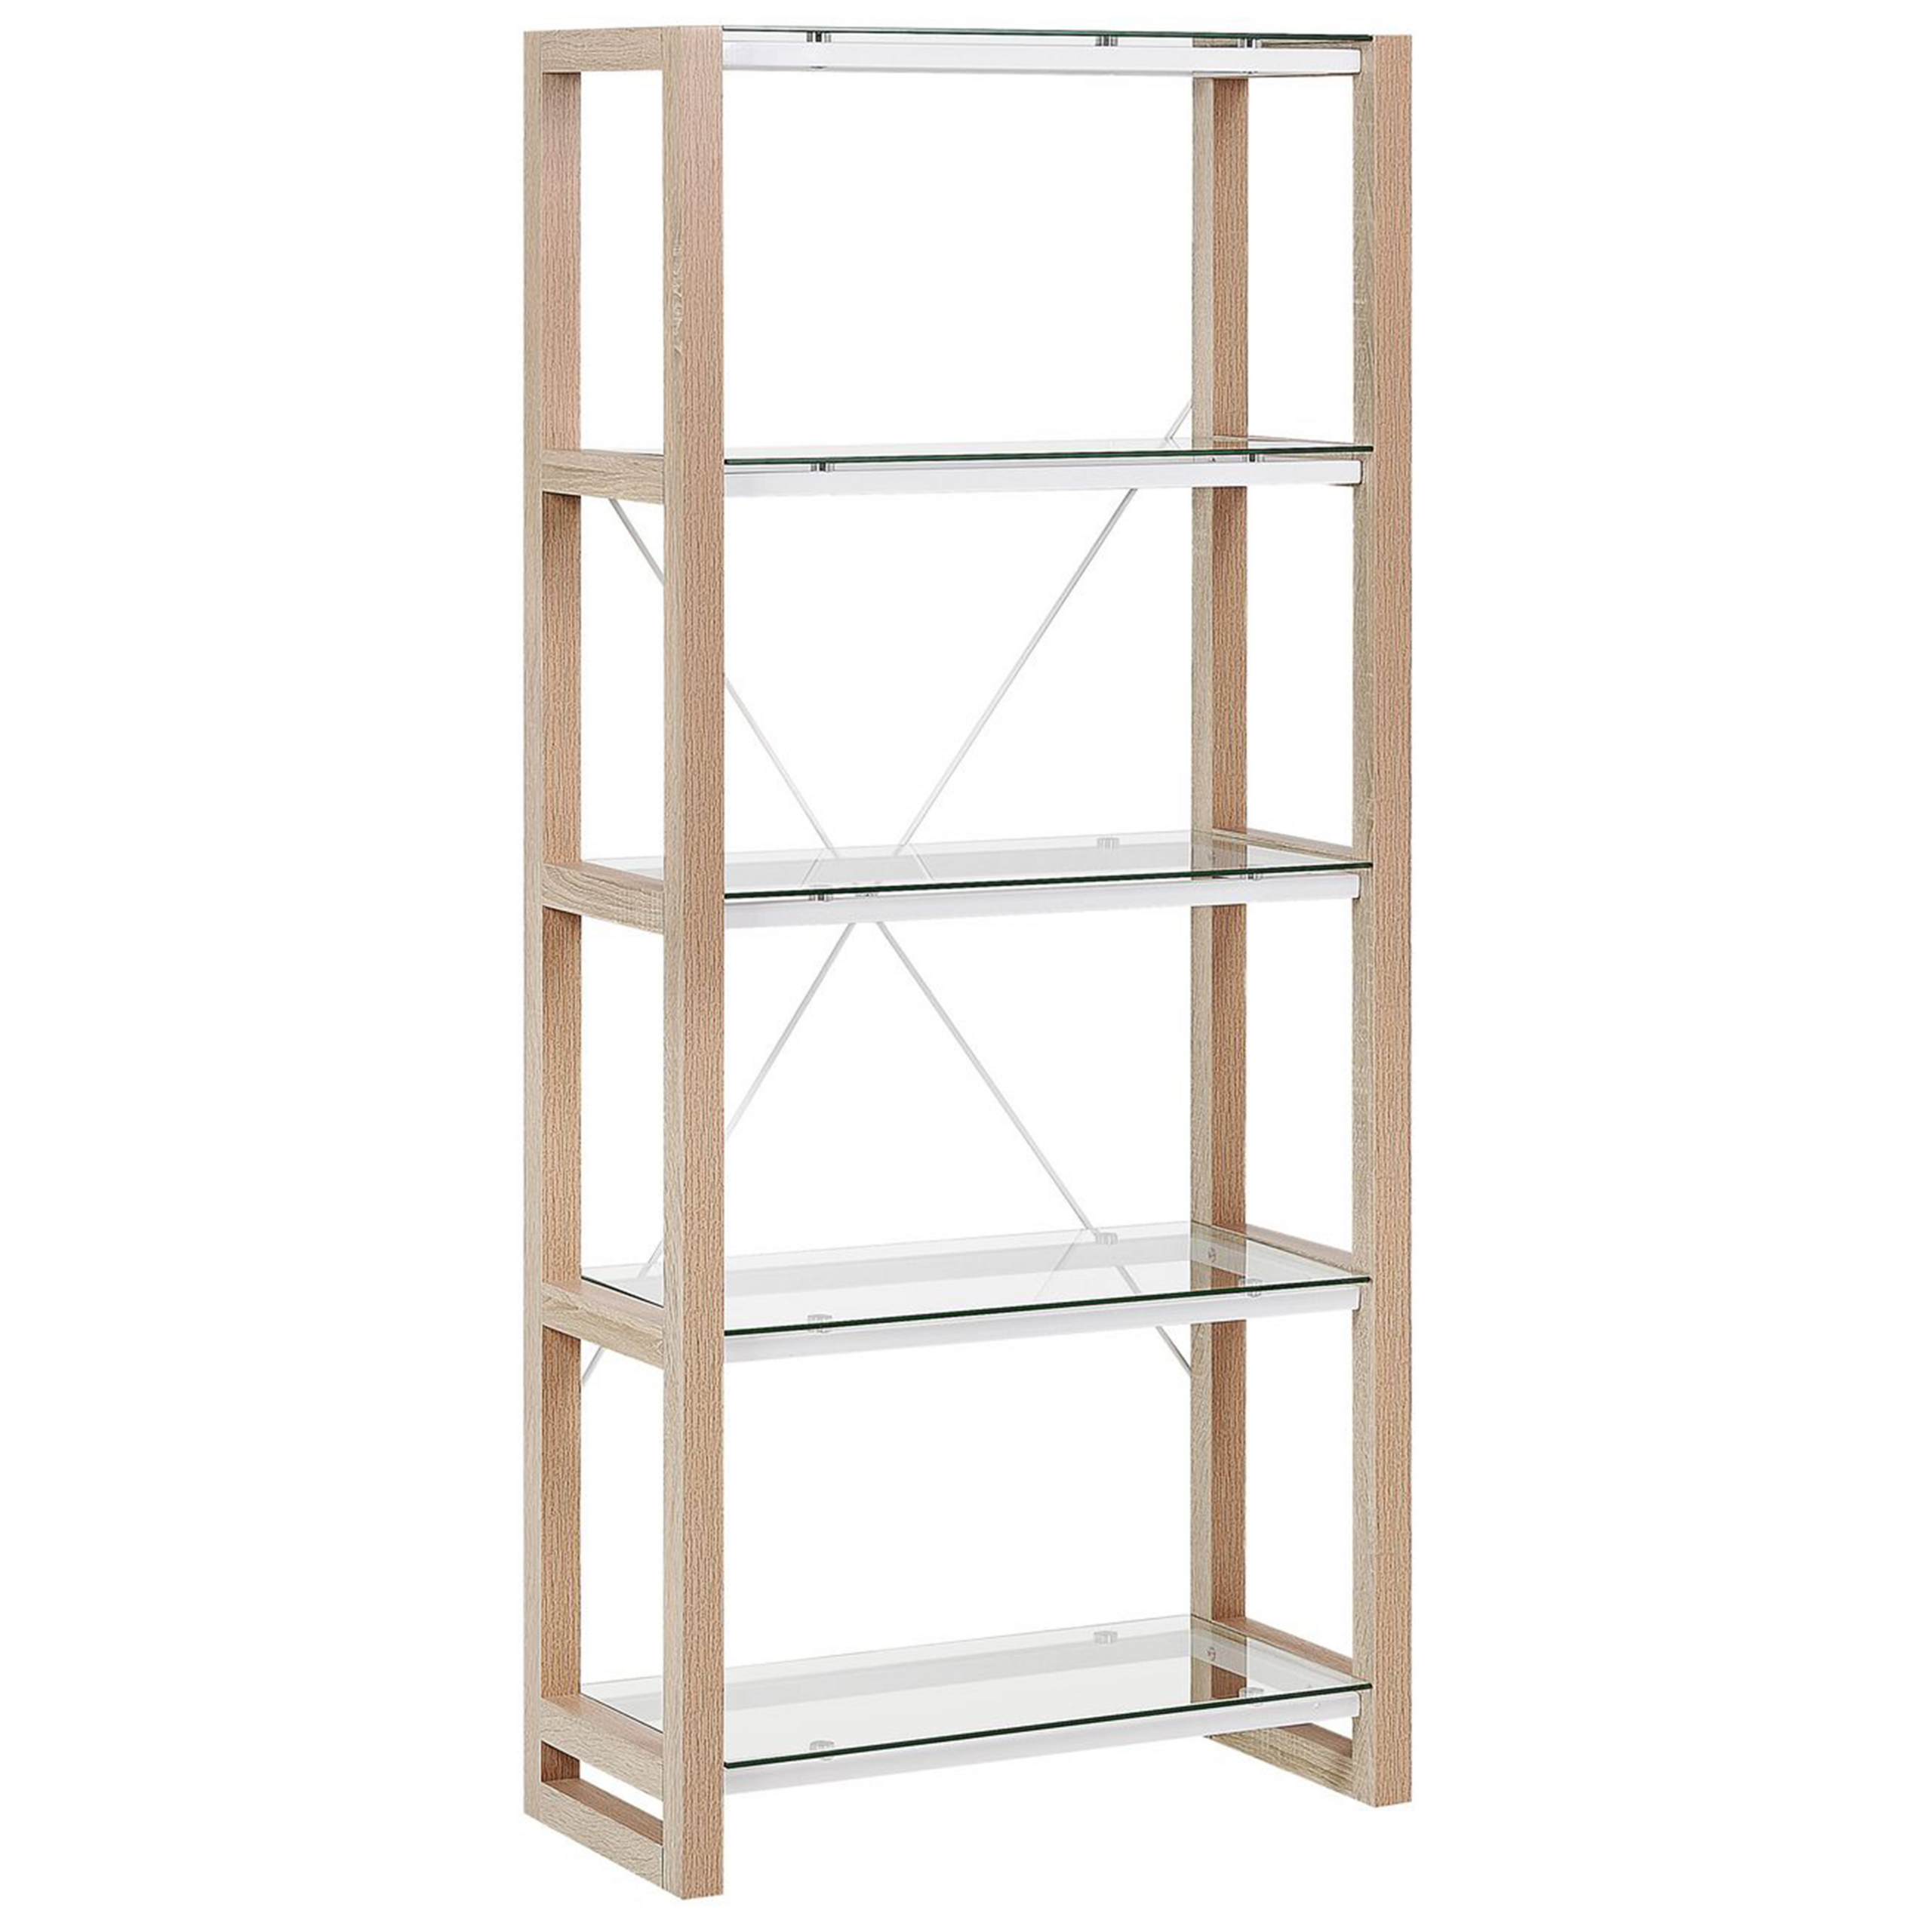 Beliani Bookcase White and Light Wood Wooden Glass Shelves Freestanding Shelving Unit Scandinavian Design